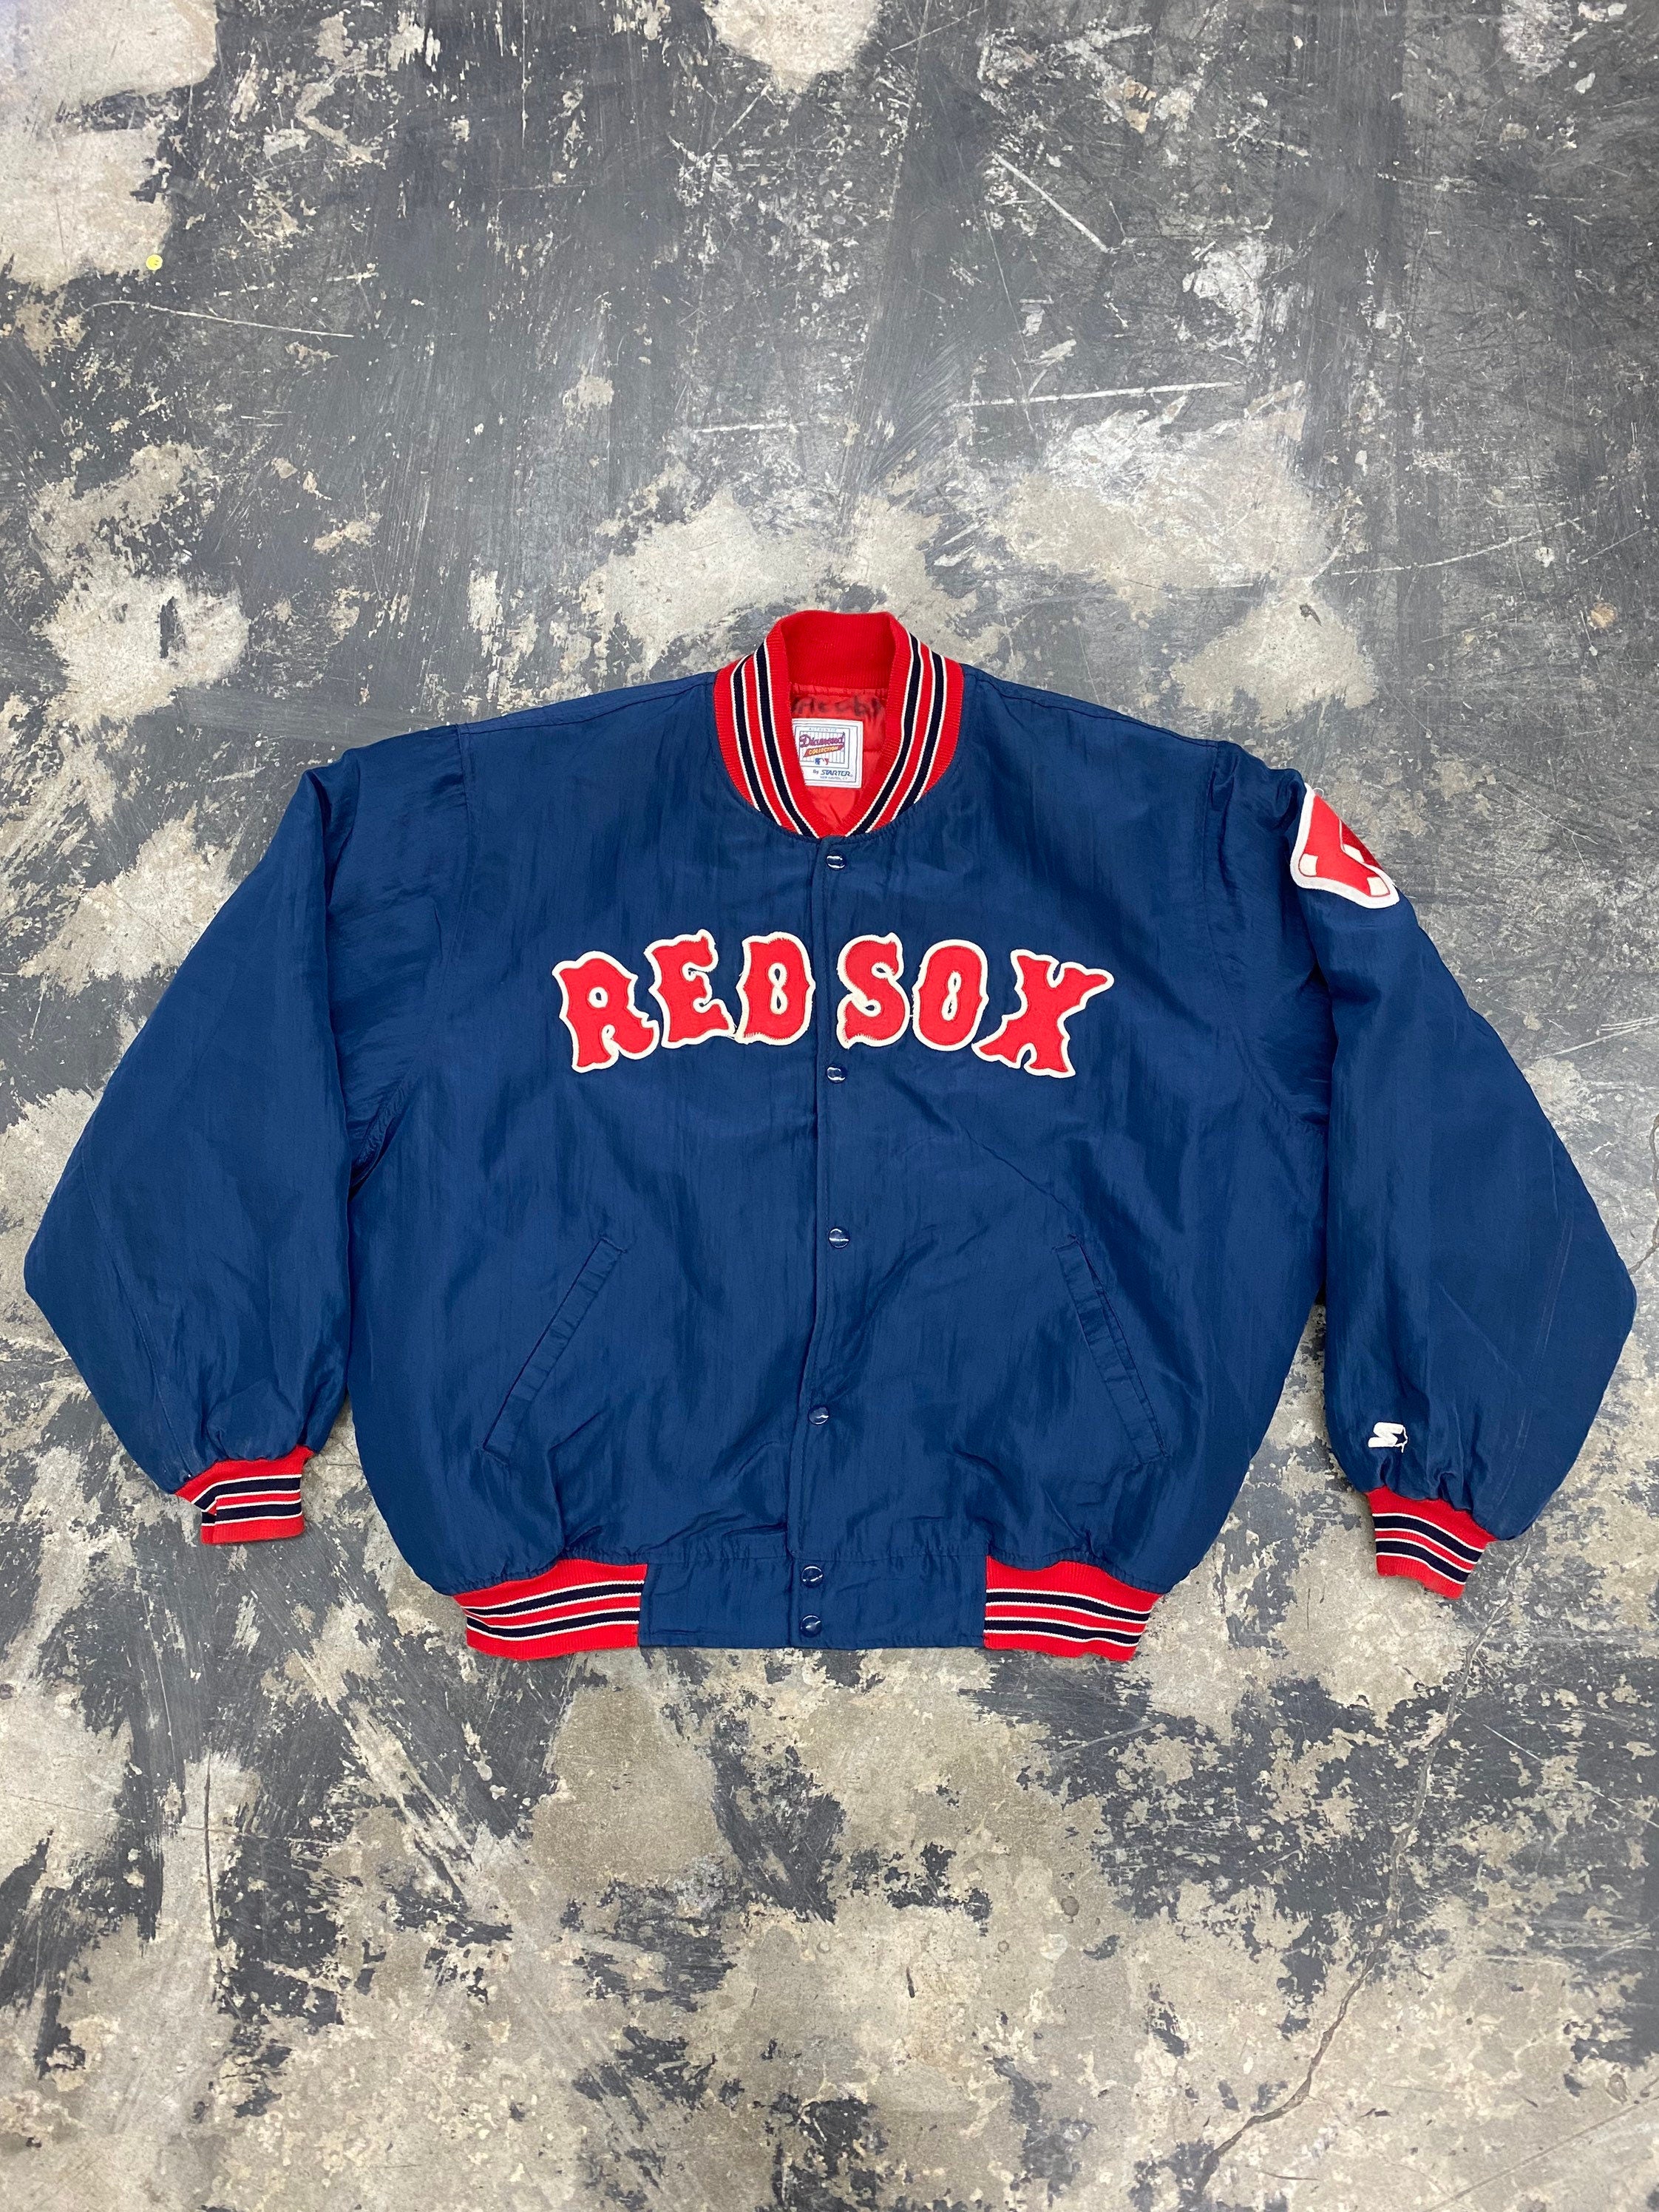 Vintage 90s MLB Boston Red Sox Baseball Jacket by Majestic All  Etsy